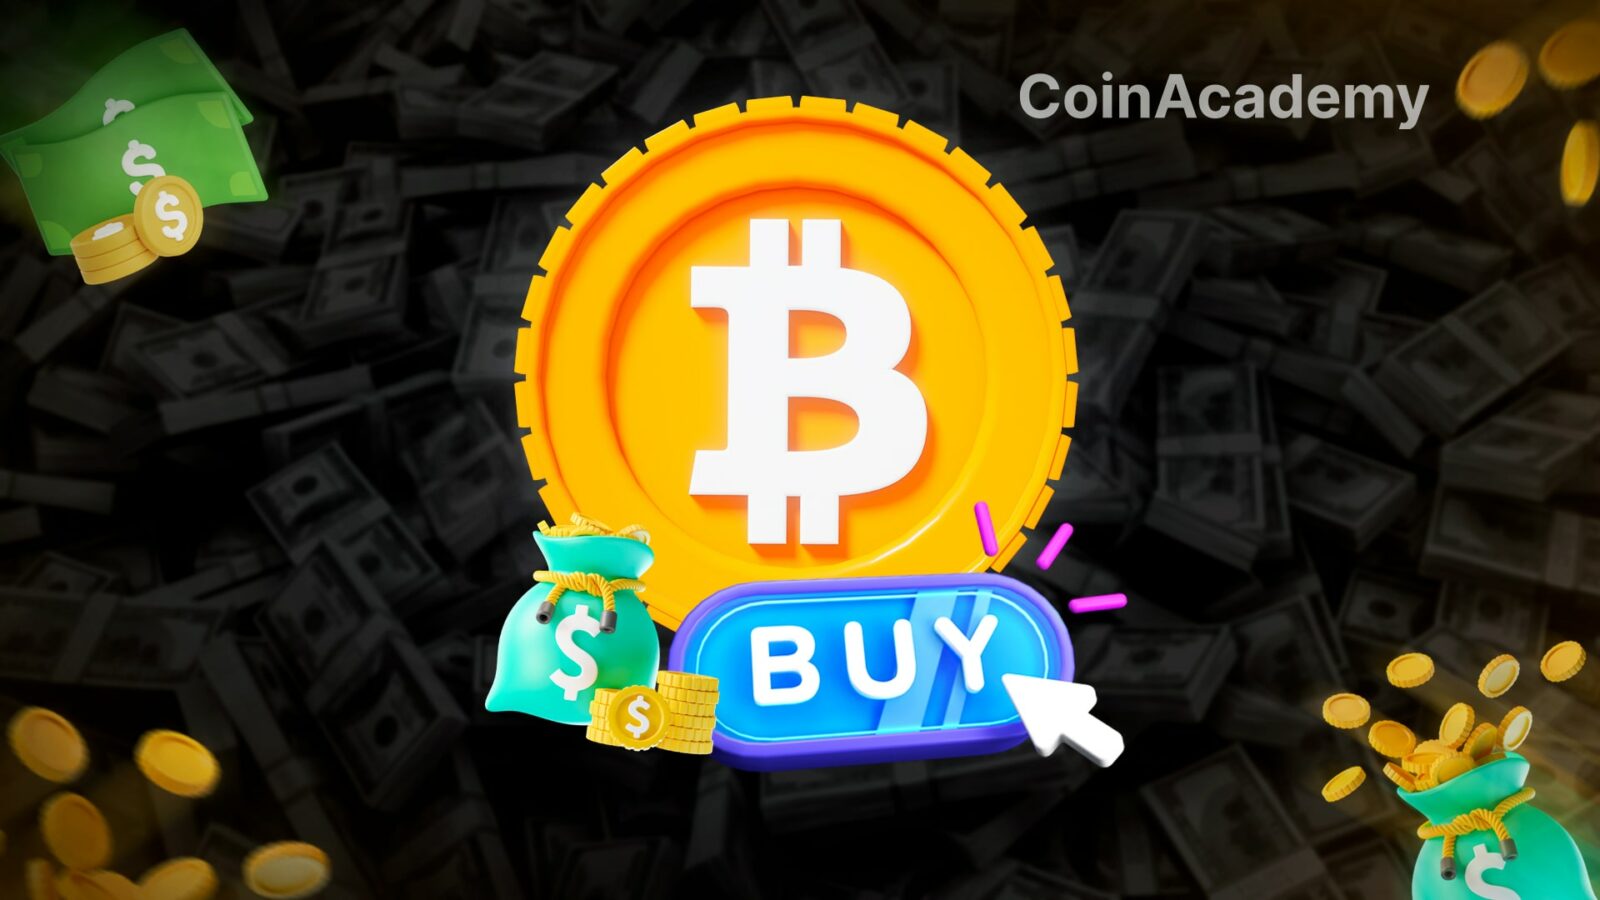 acheter et envoyer des bitcoins